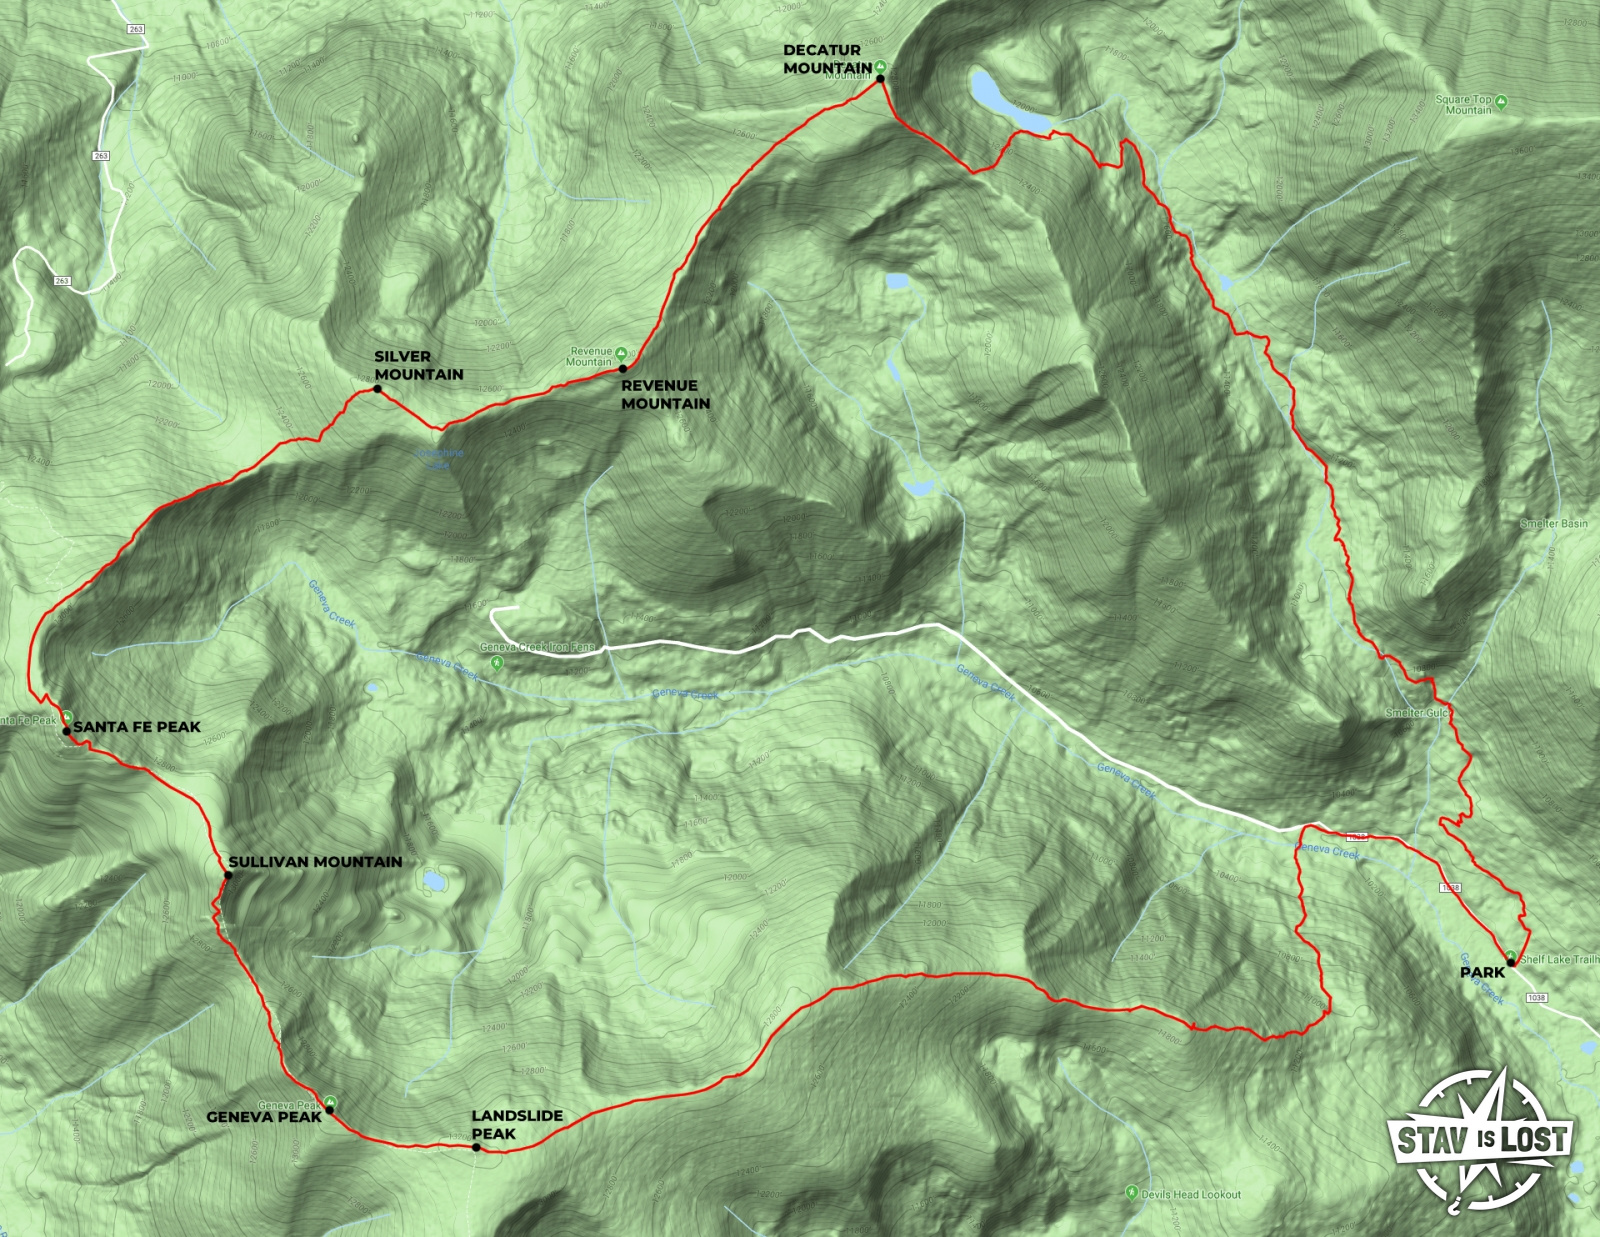 map for Decatur, Revenue, Santa Fe, Geneva Loop via Shelf Lake by stav is lost